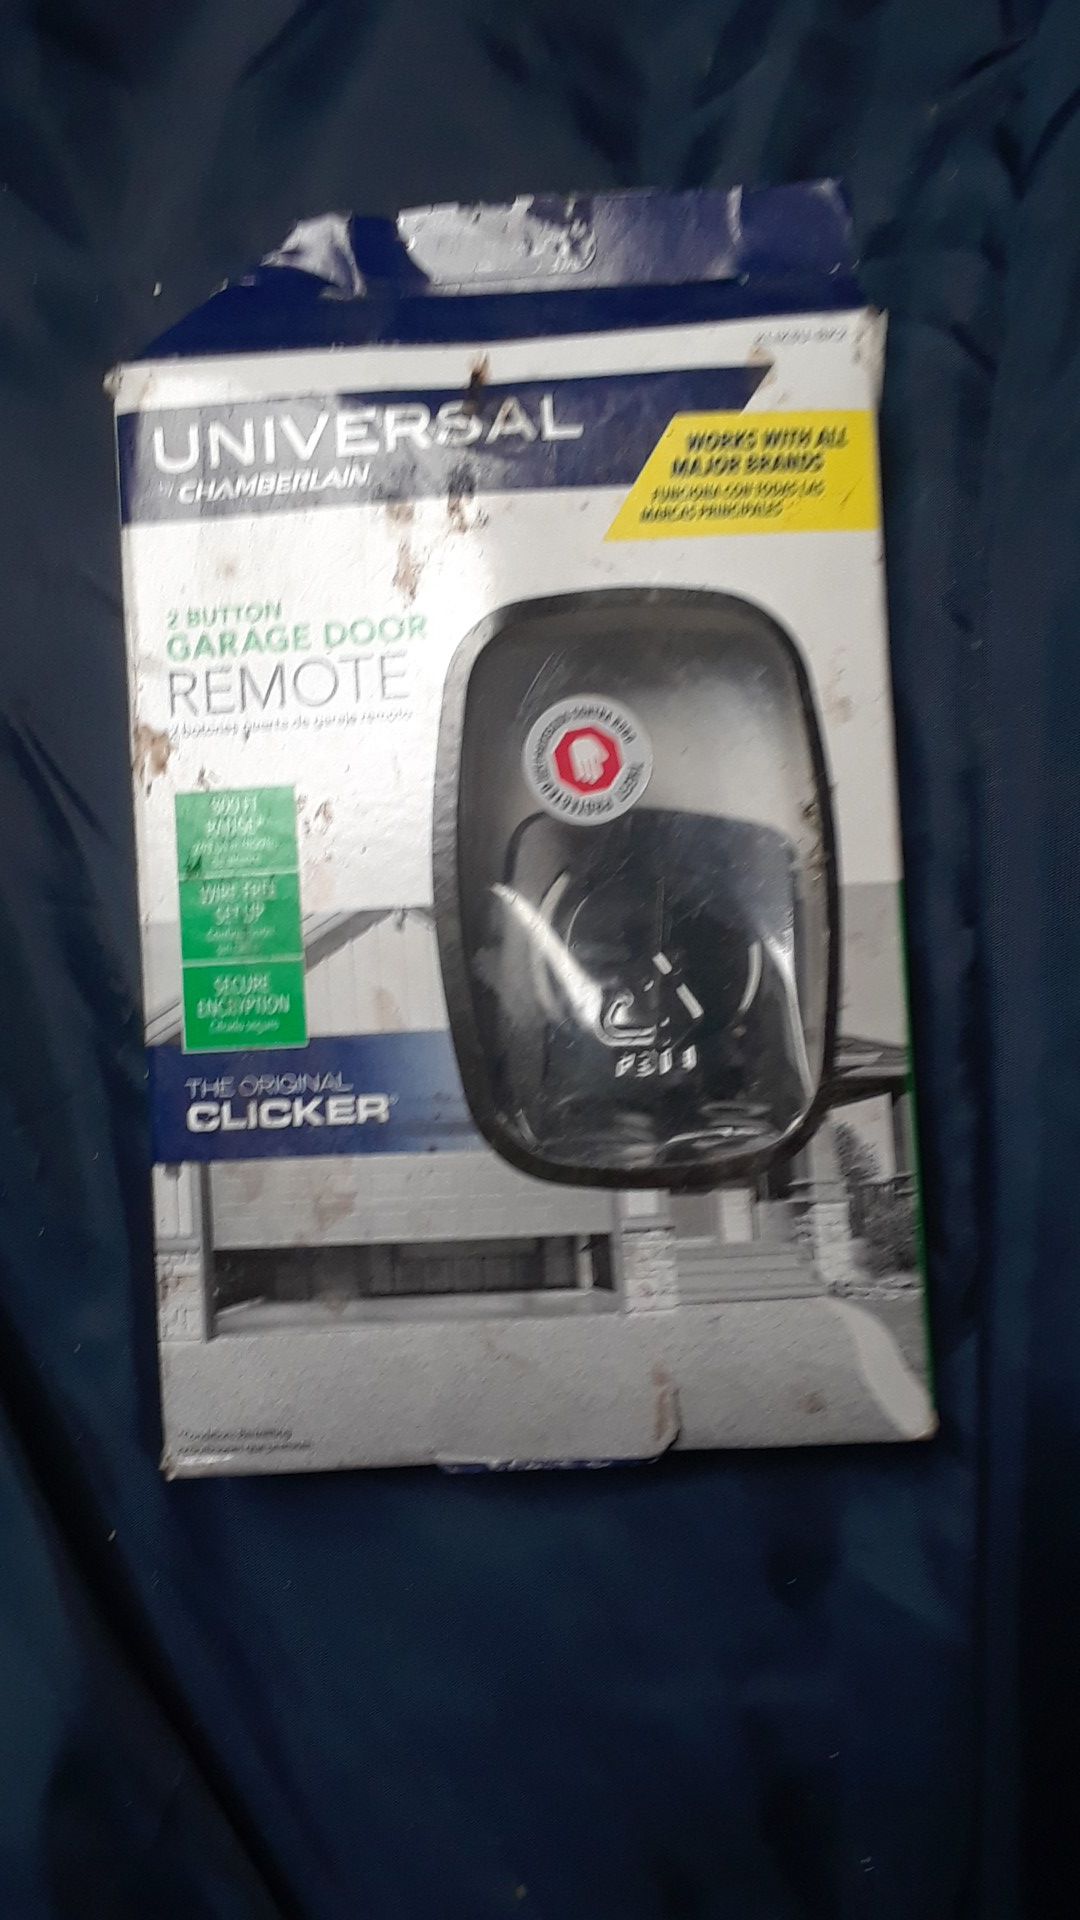 Chamberlain Universal 2 button garage door remote brand new